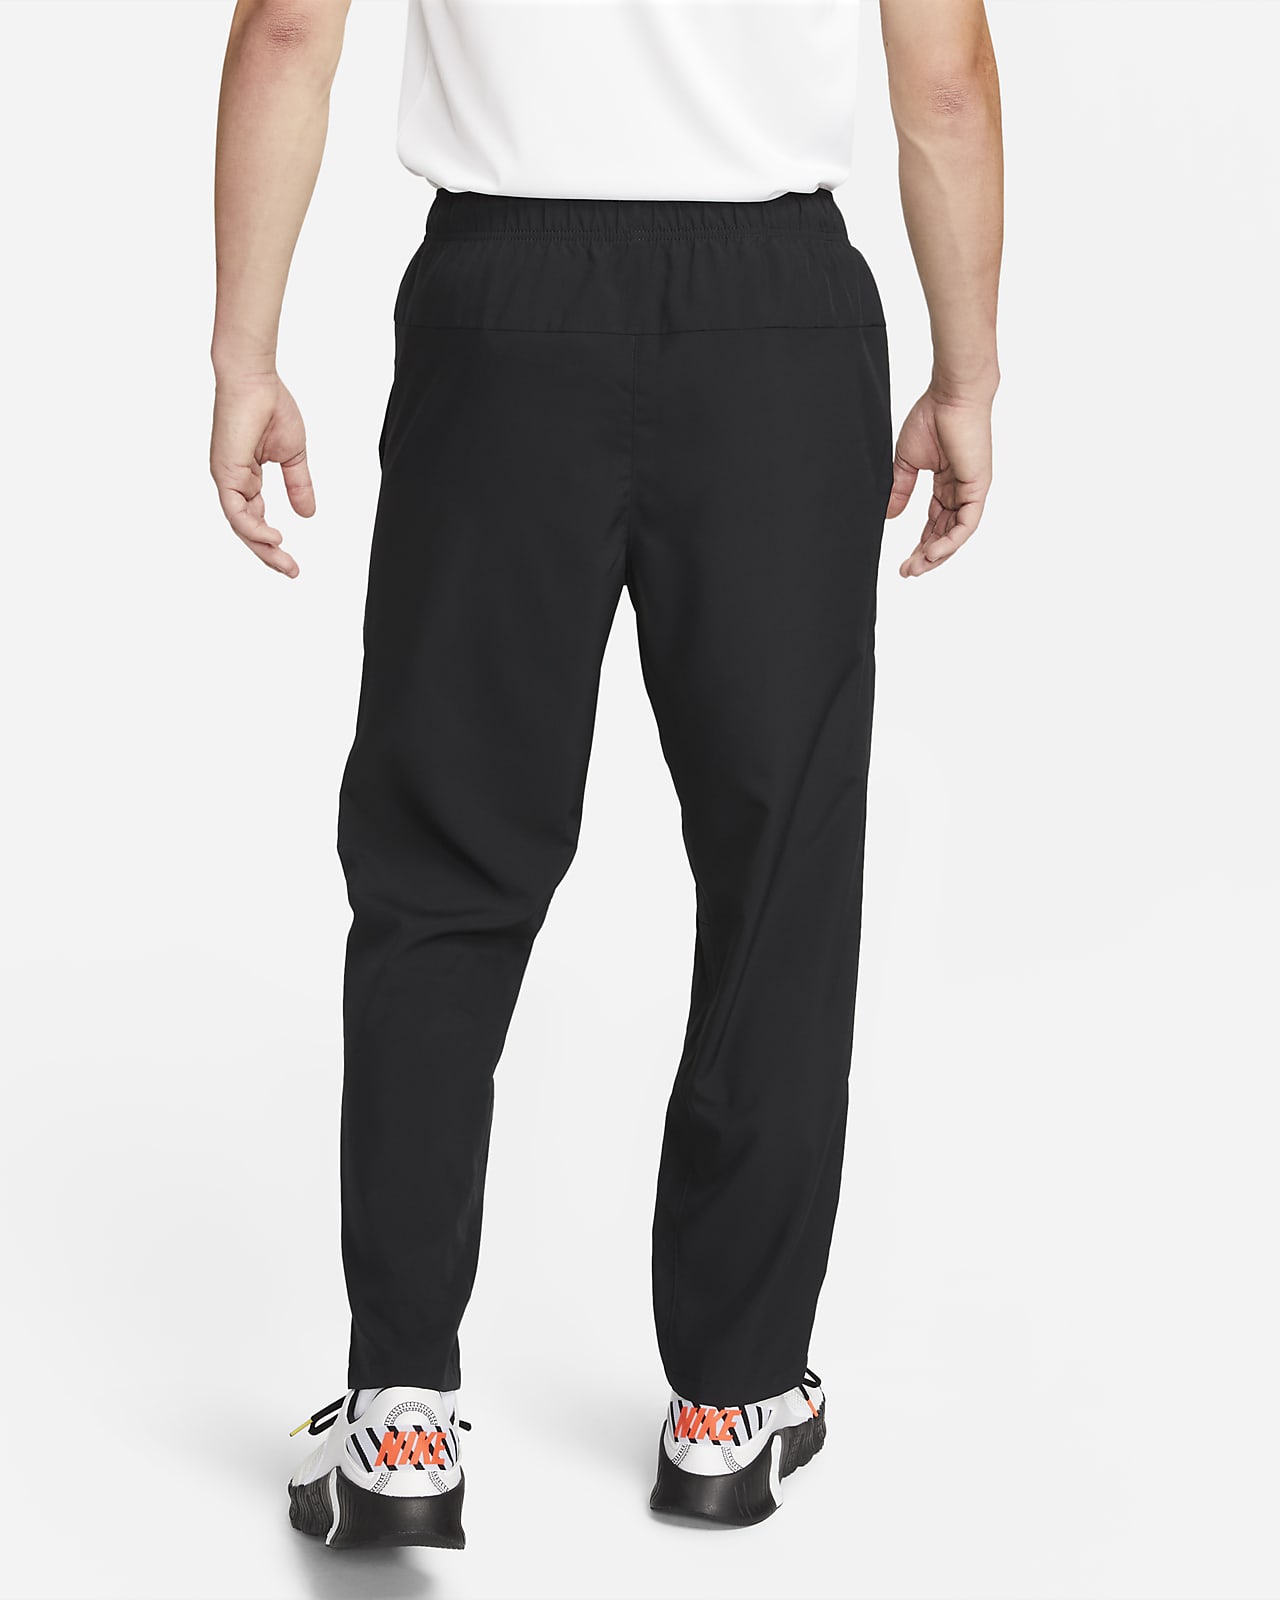 Nike Sportswear Mens Open Hem Club Fleece Pants BlackWhite XXLarge   Amazonin Clothing  Accessories